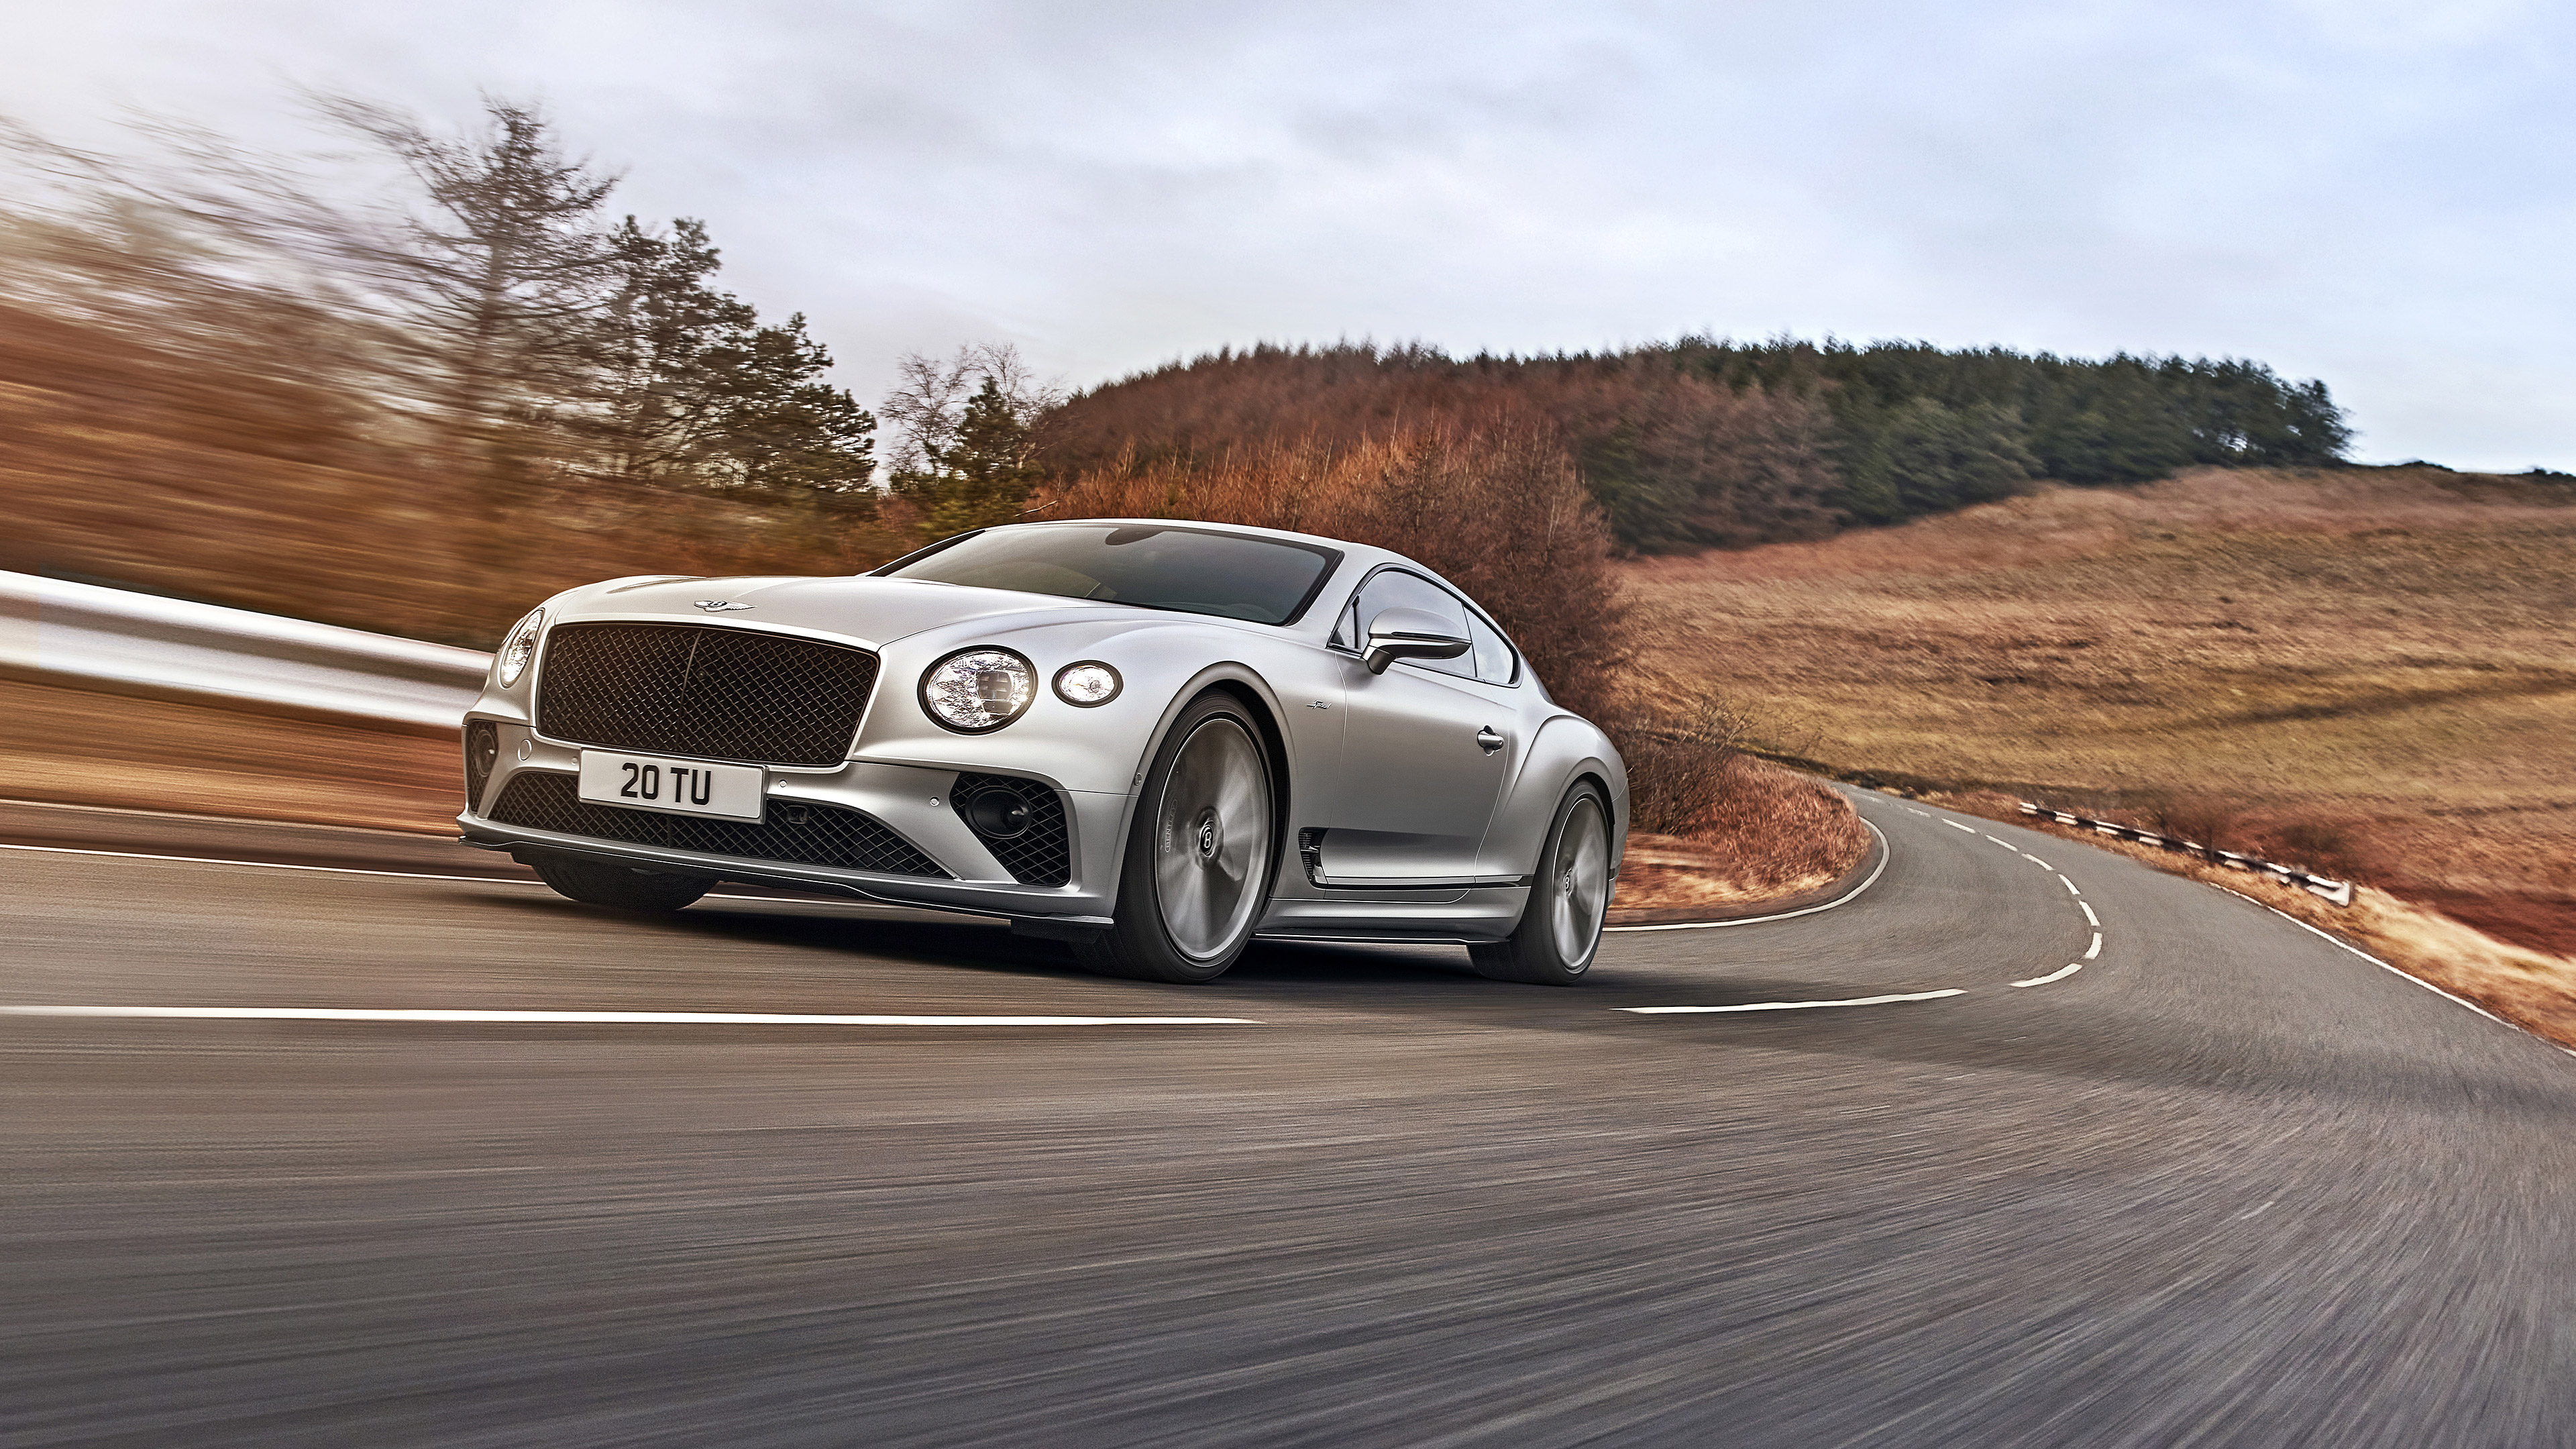 Baixe gratuitamente a imagem Bentley, Carro, Veículos, Carro Prateado, Bentley Continental, Velocidade Bentley Continental Gt na área de trabalho do seu PC